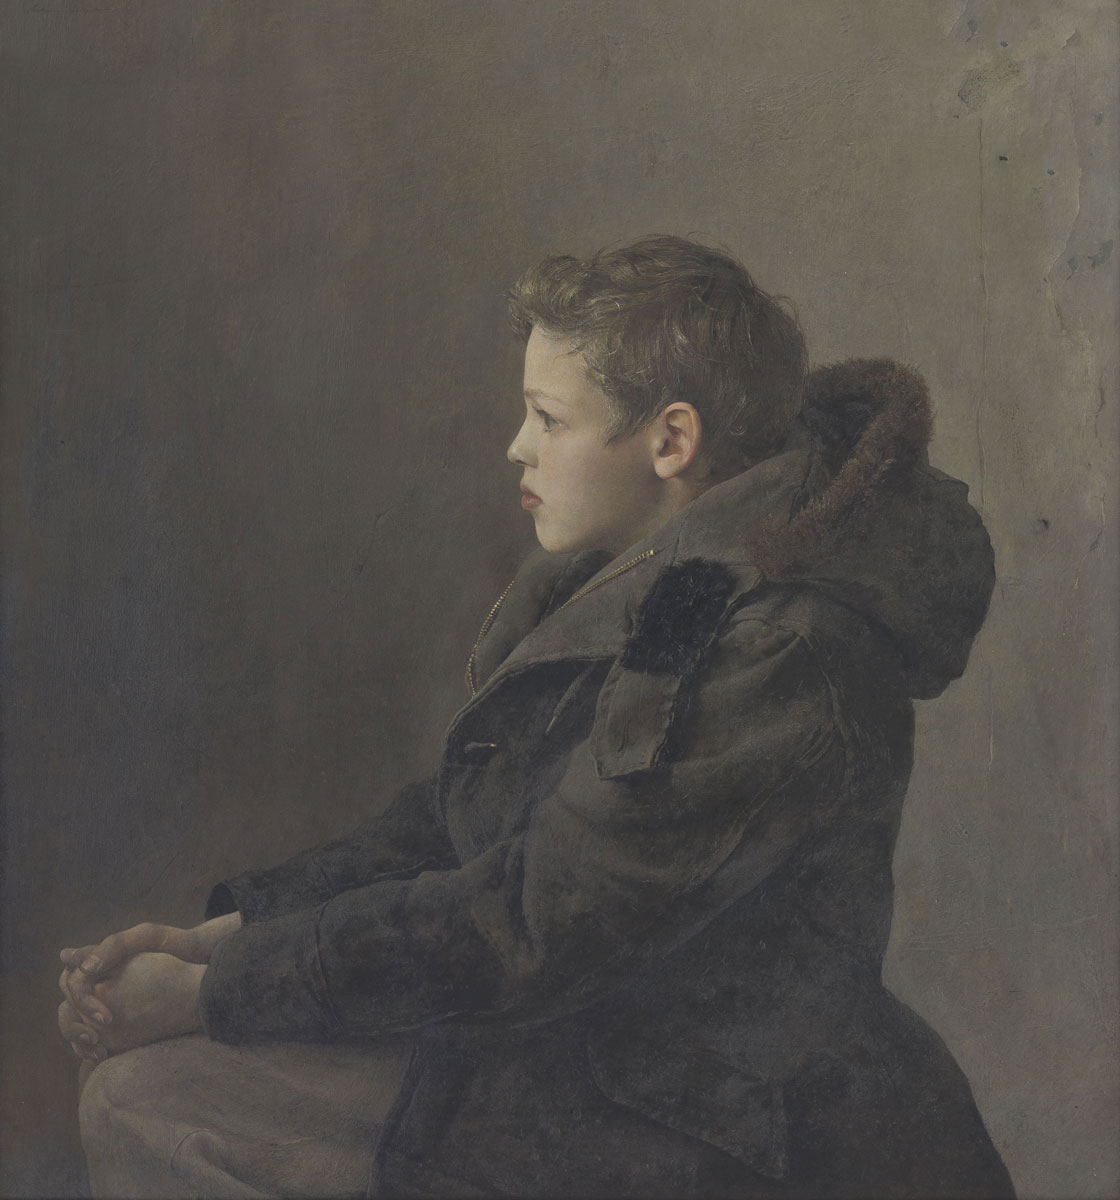 Andrew+Wyeth-1917-2009 (25).jpg